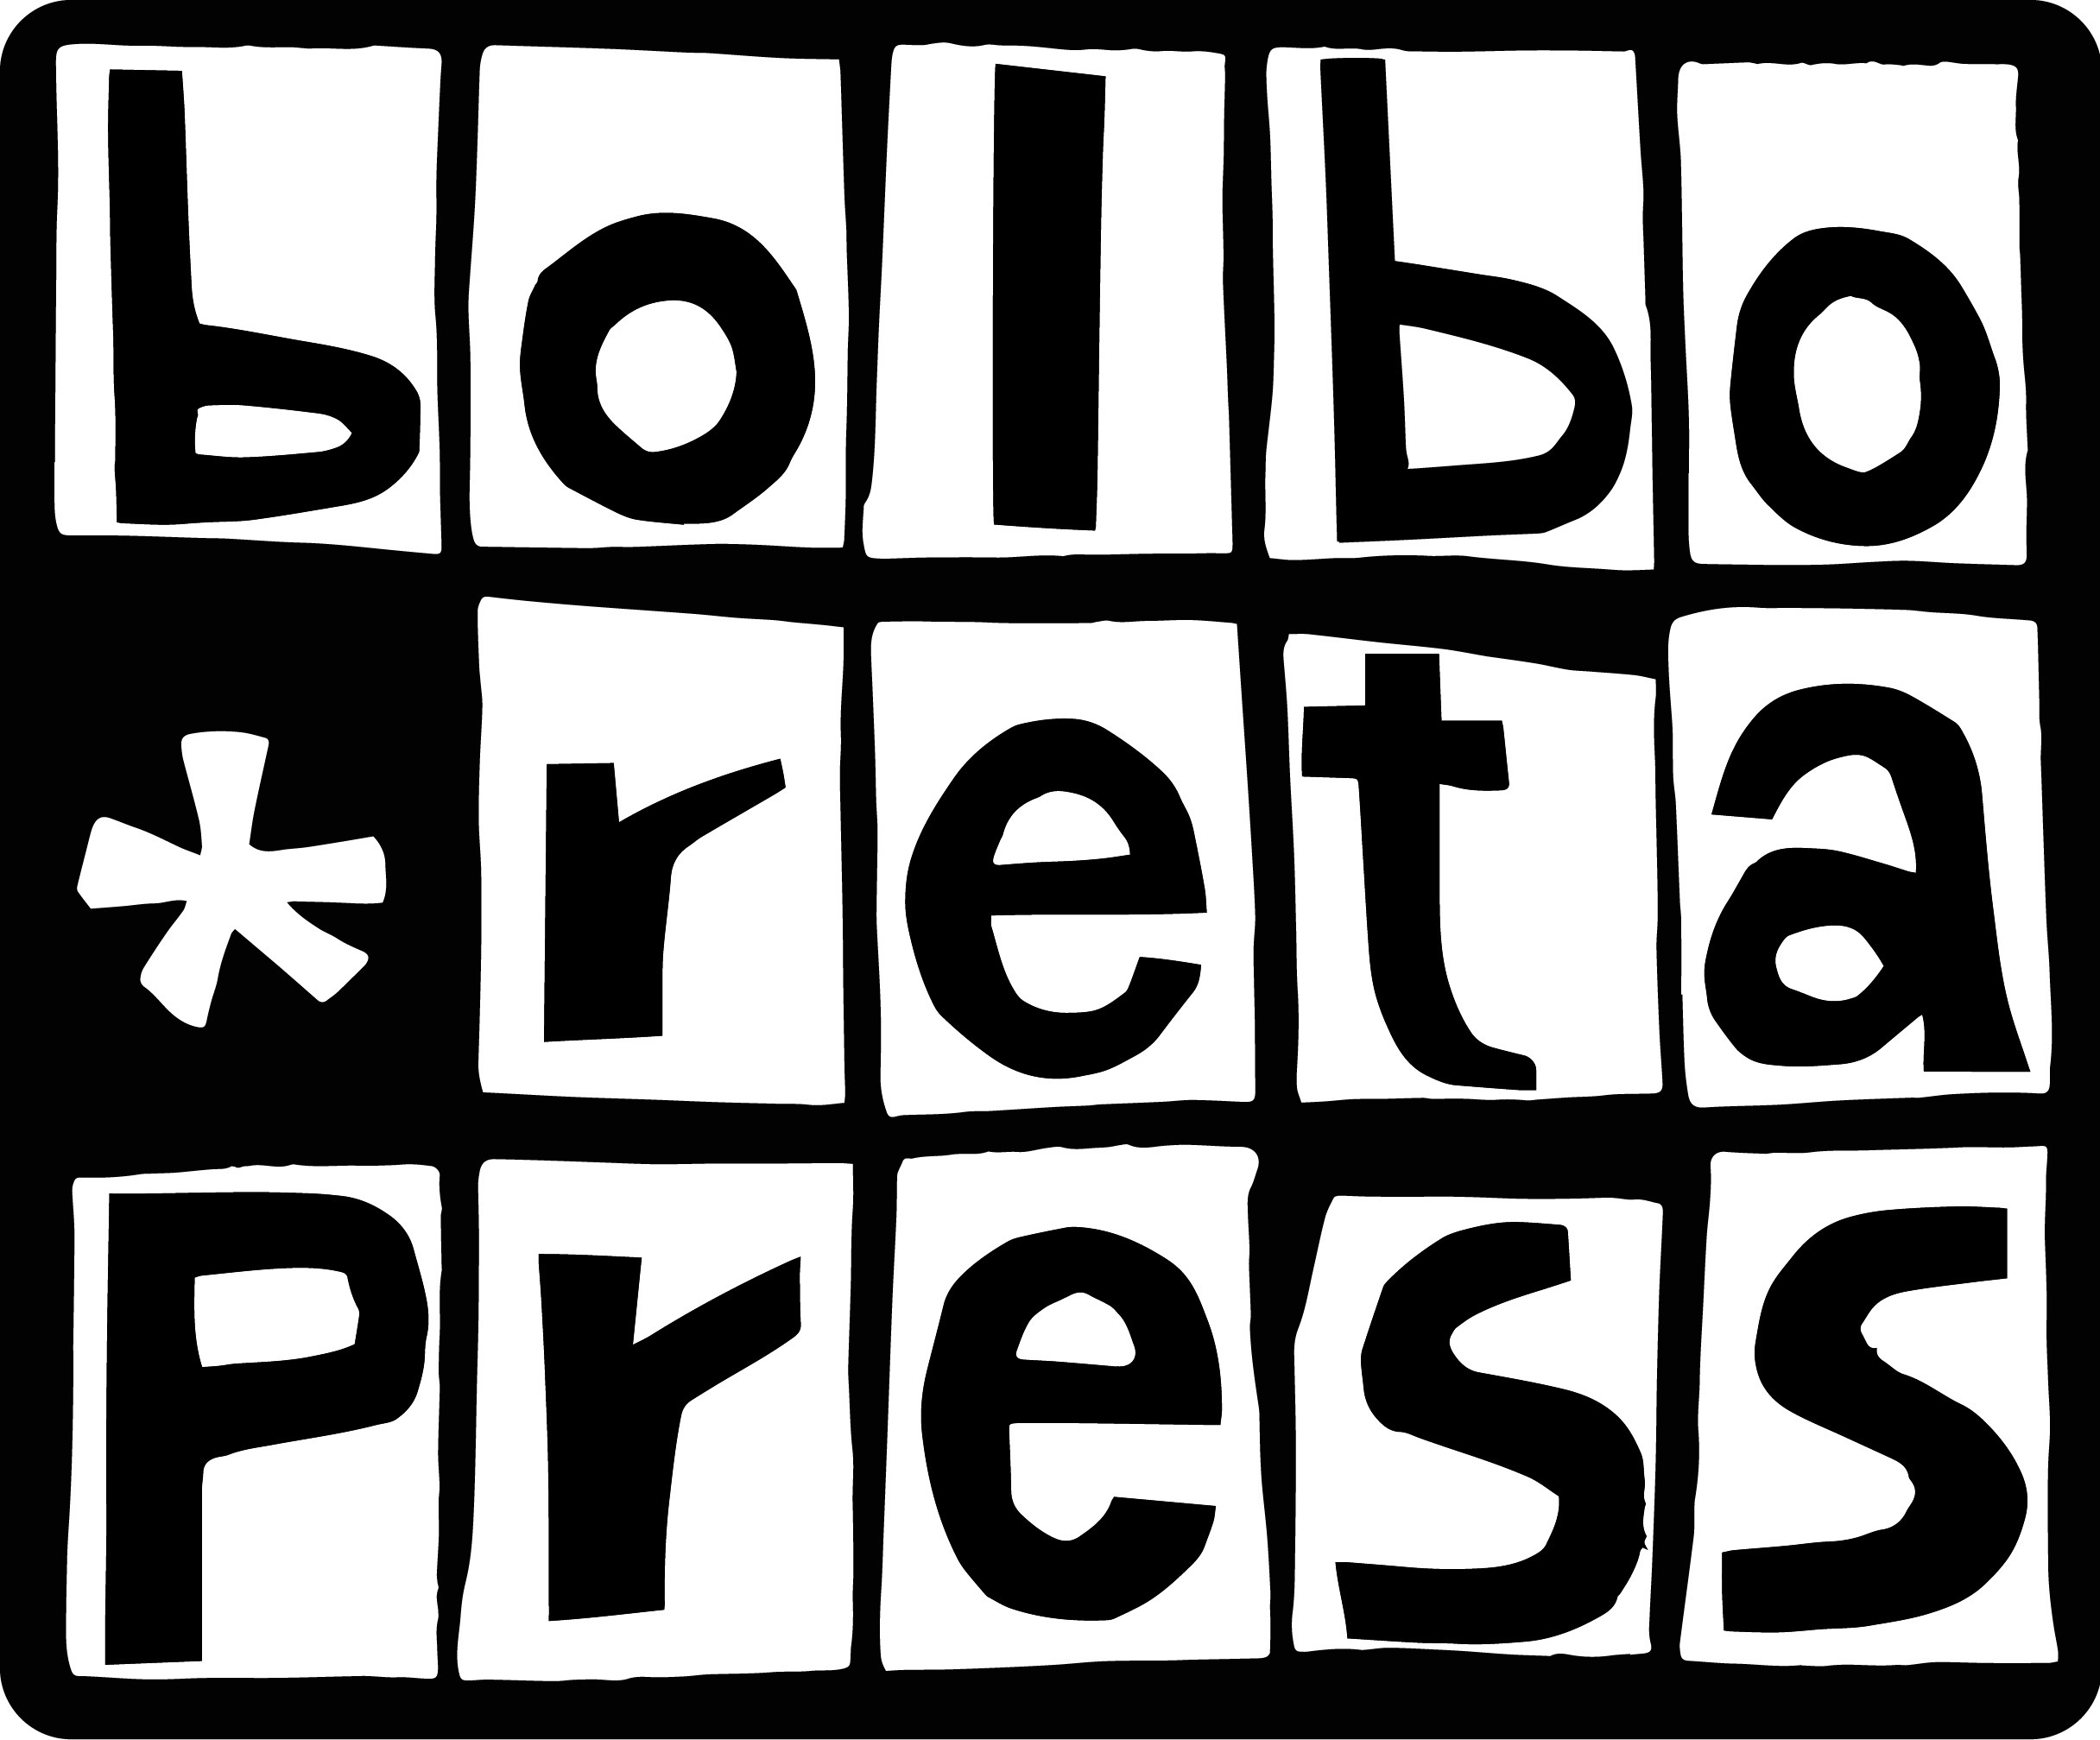 Bolboreta Press